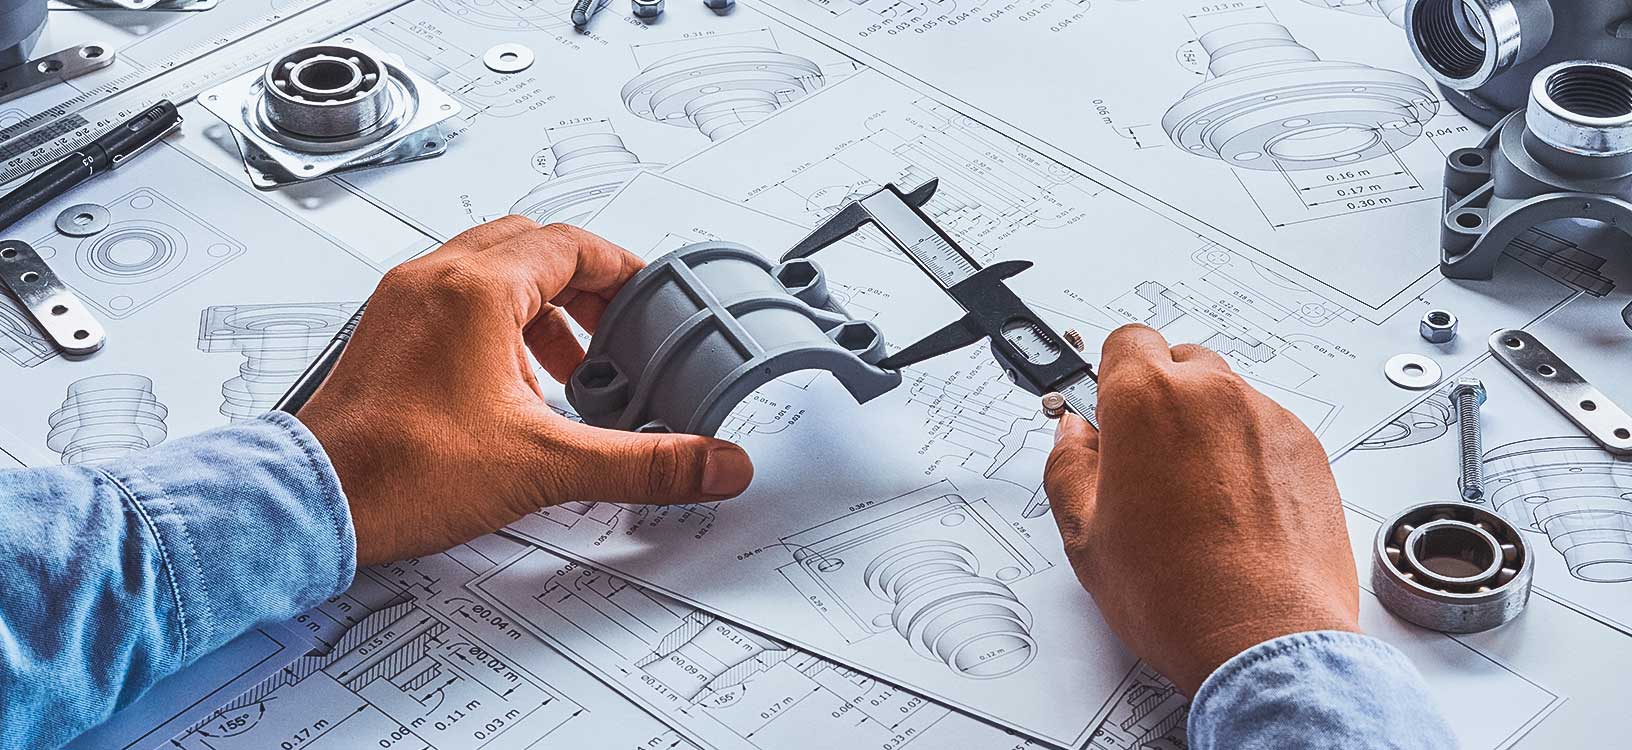 Engineer technician designing drawings & mechanical parts using Hexagon 3D design tools